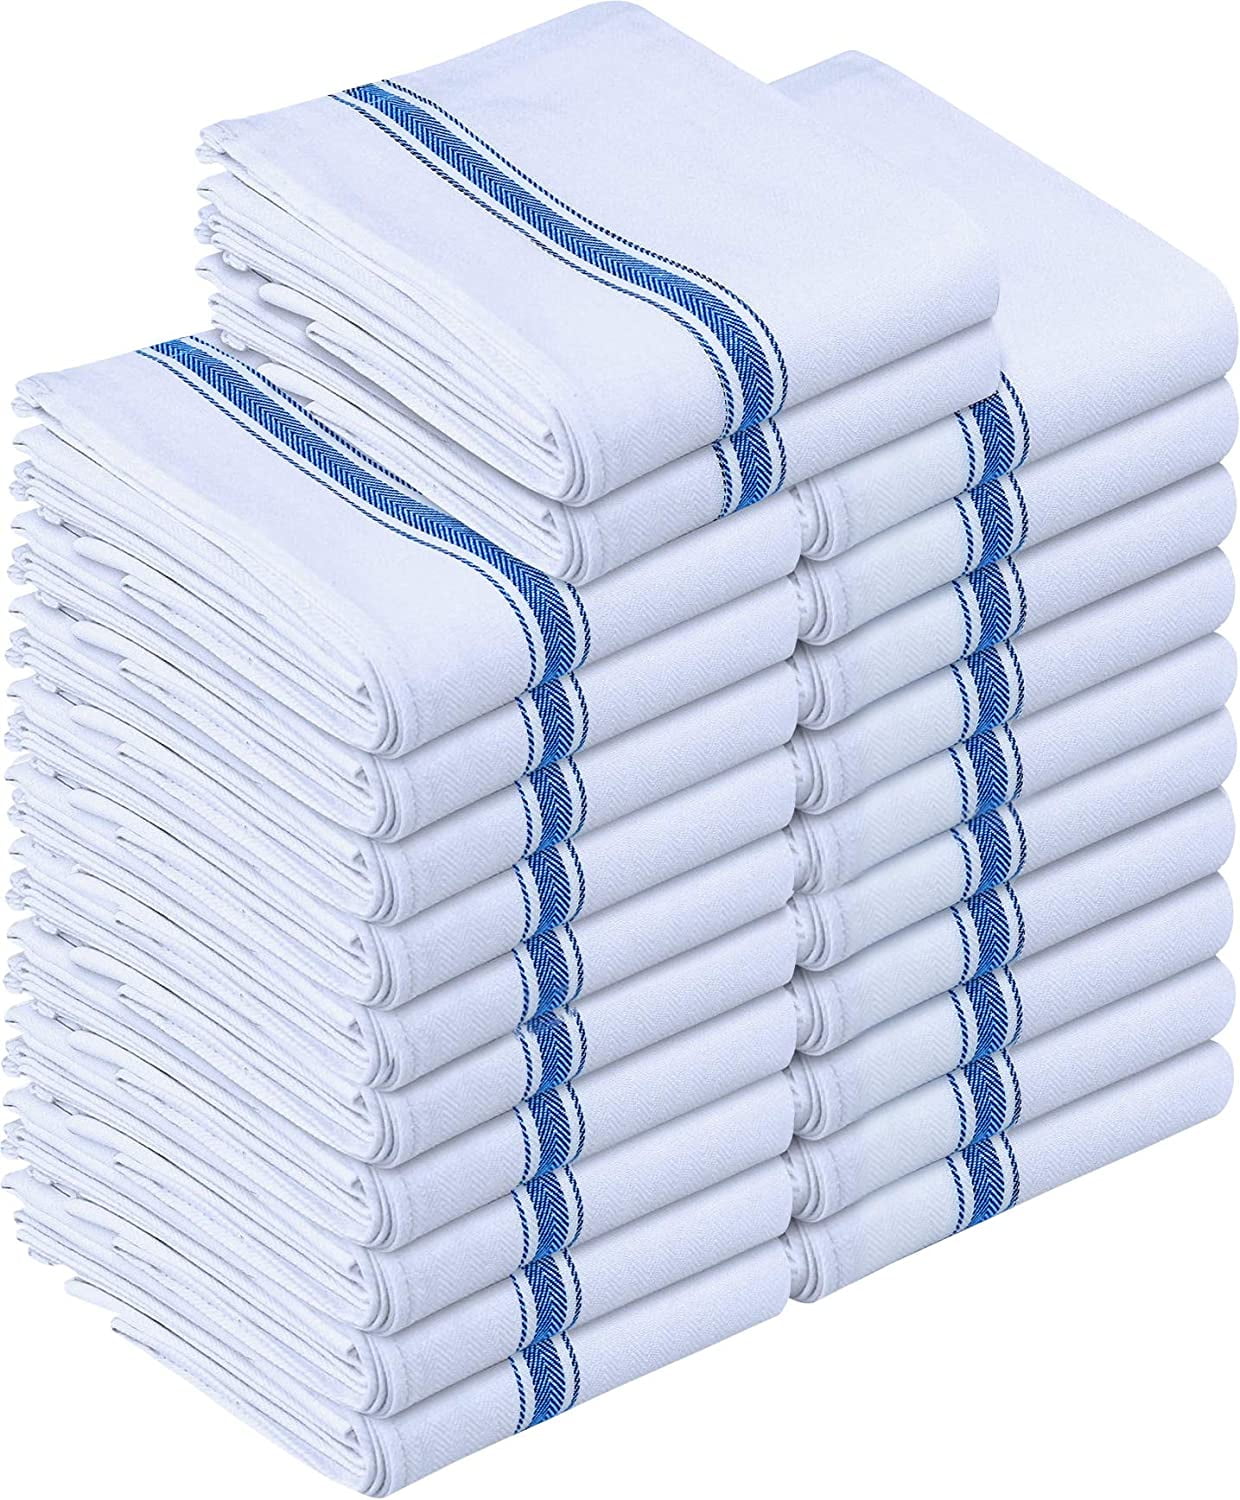 Utopia Towels 24 Pack Dish Towels, 15 x 25 Inches Ultra Soft